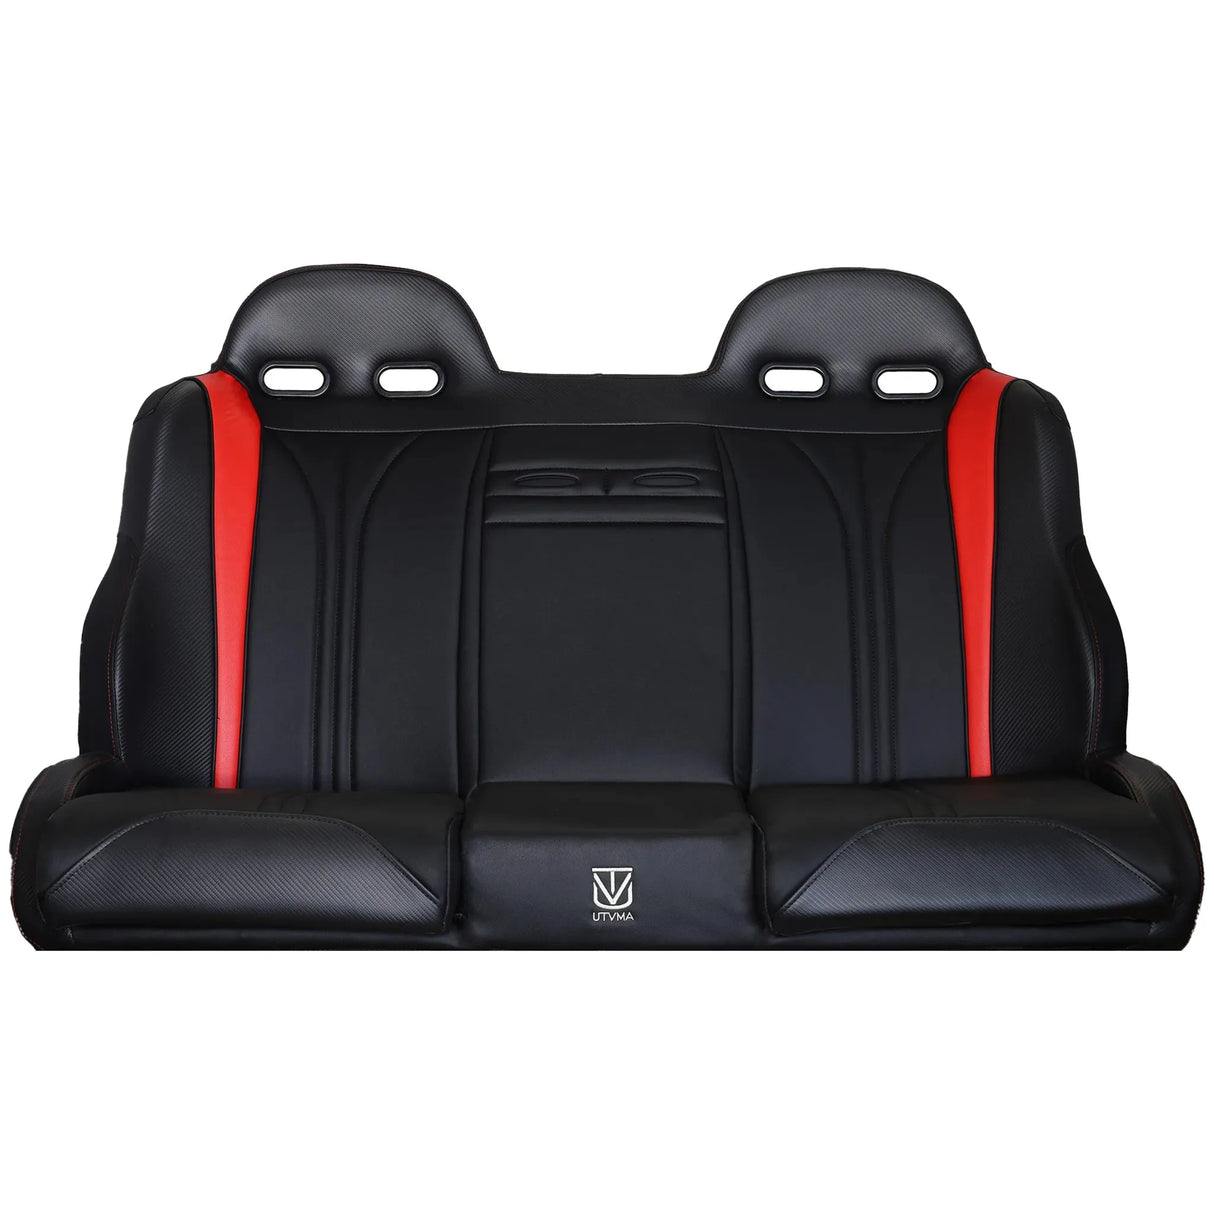 Polaris RZR  Pro XP, Turbo R, Pro R Rear Bench With Harnesses